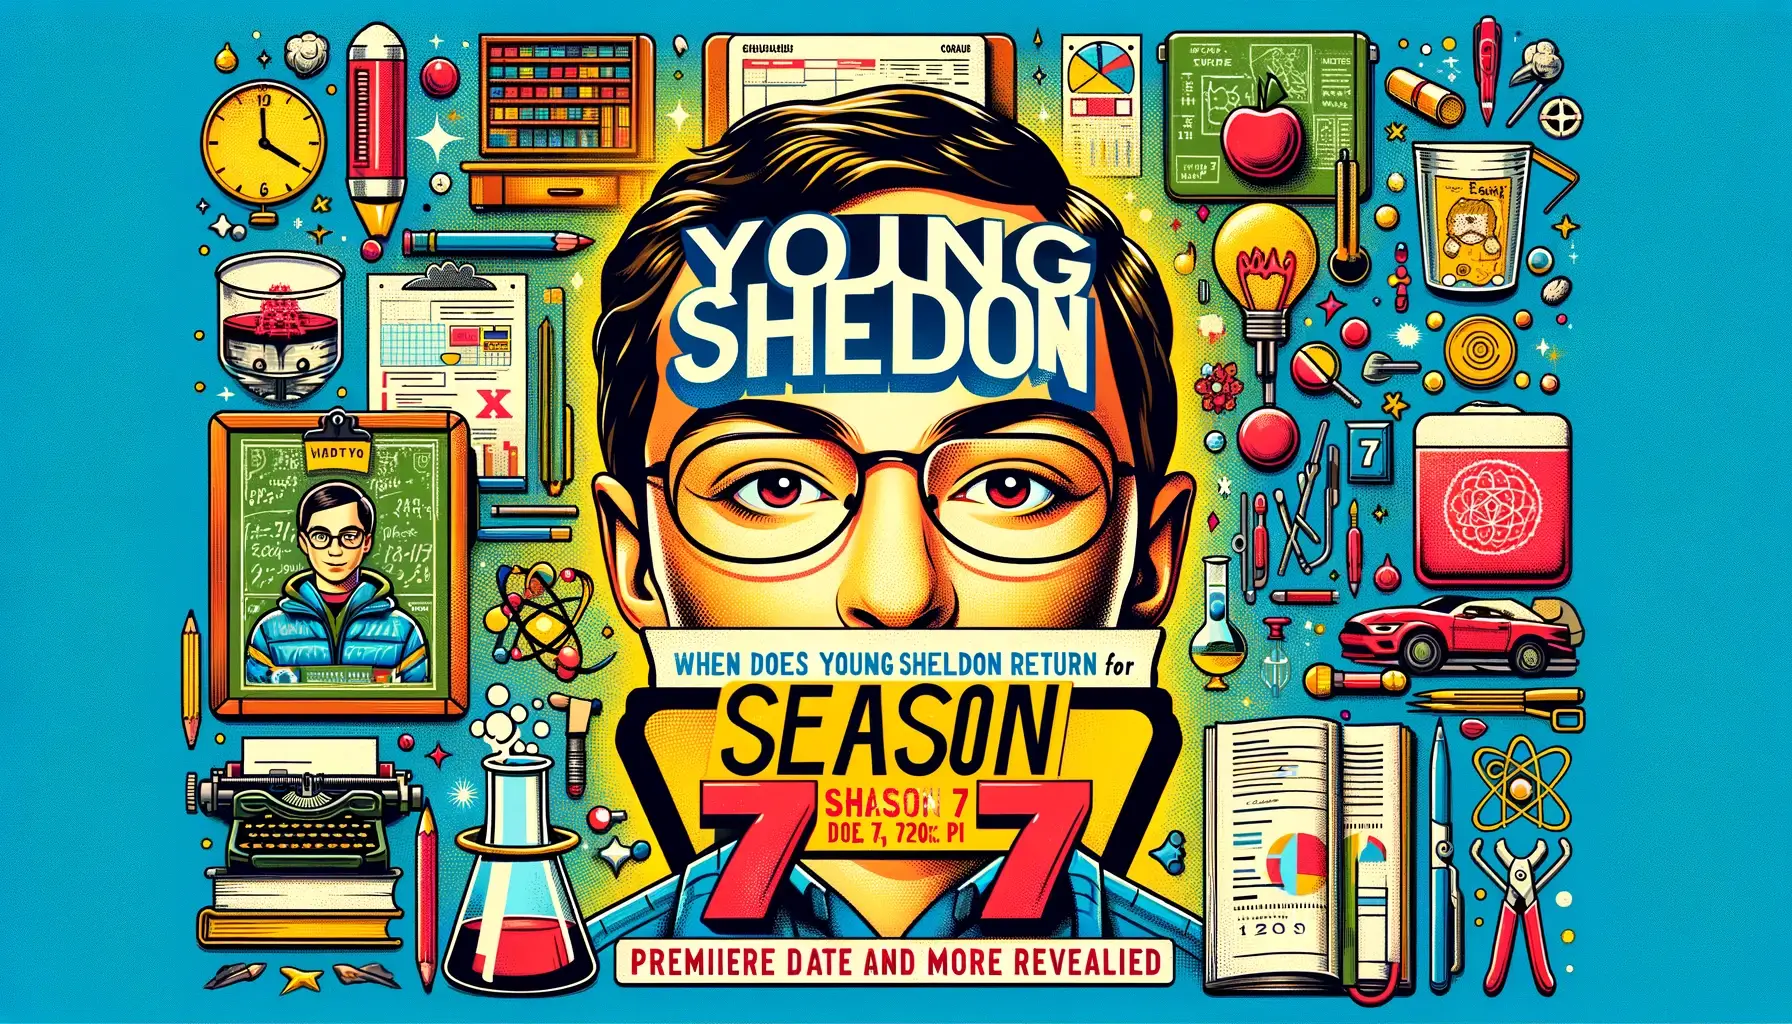 When Does Young Sheldon Return For Season 7